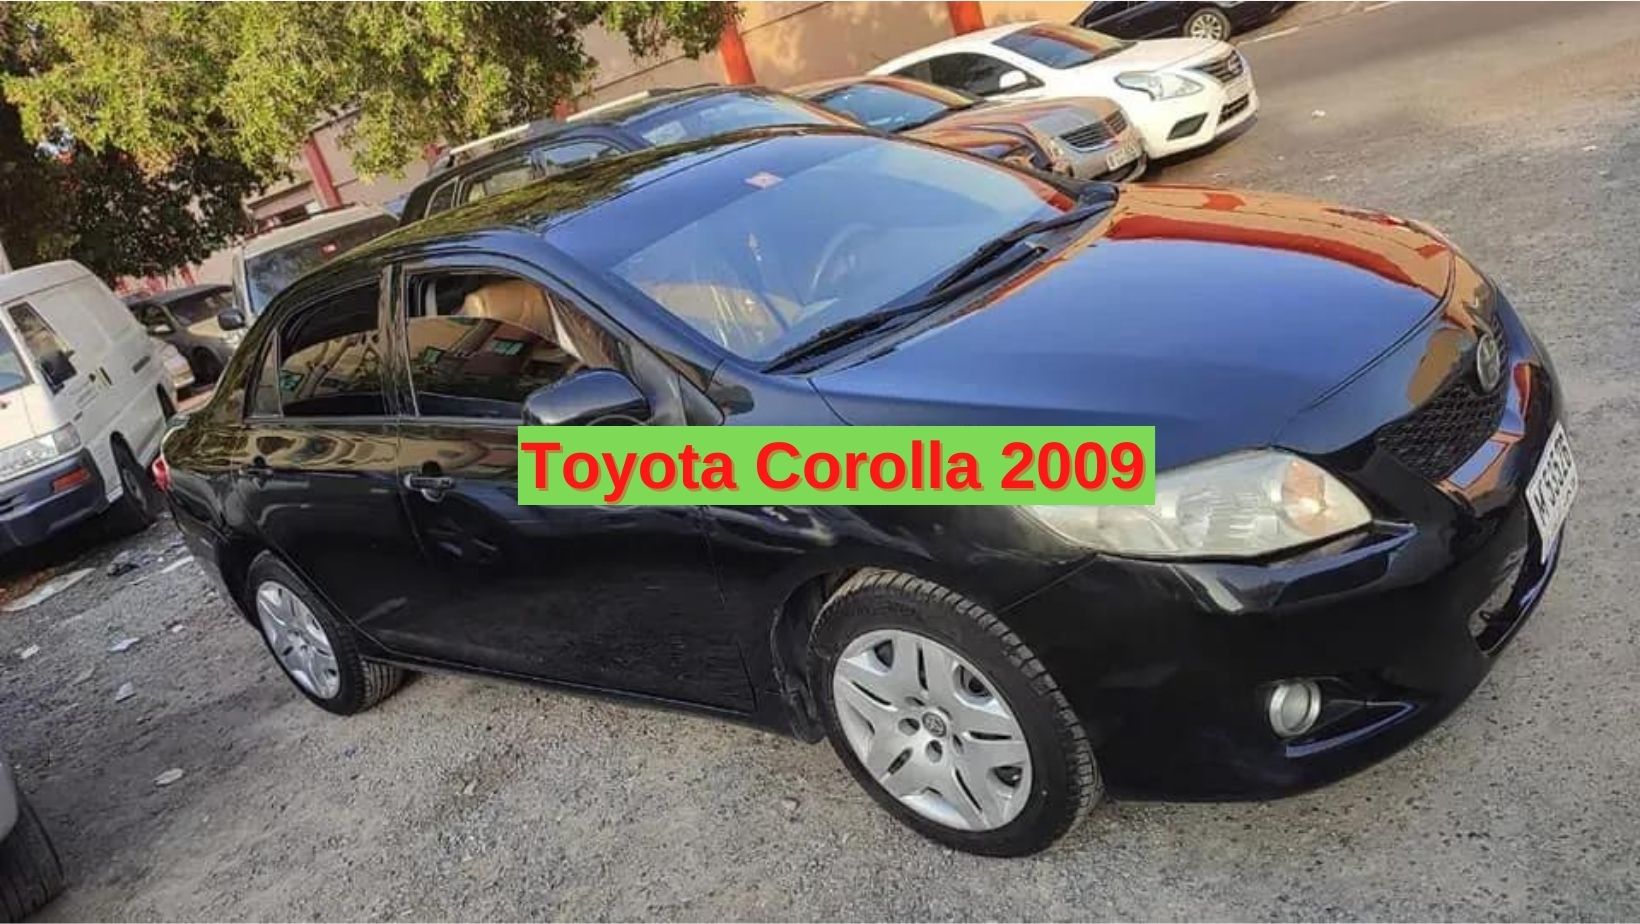 0001 - Toyota Corolla 2009